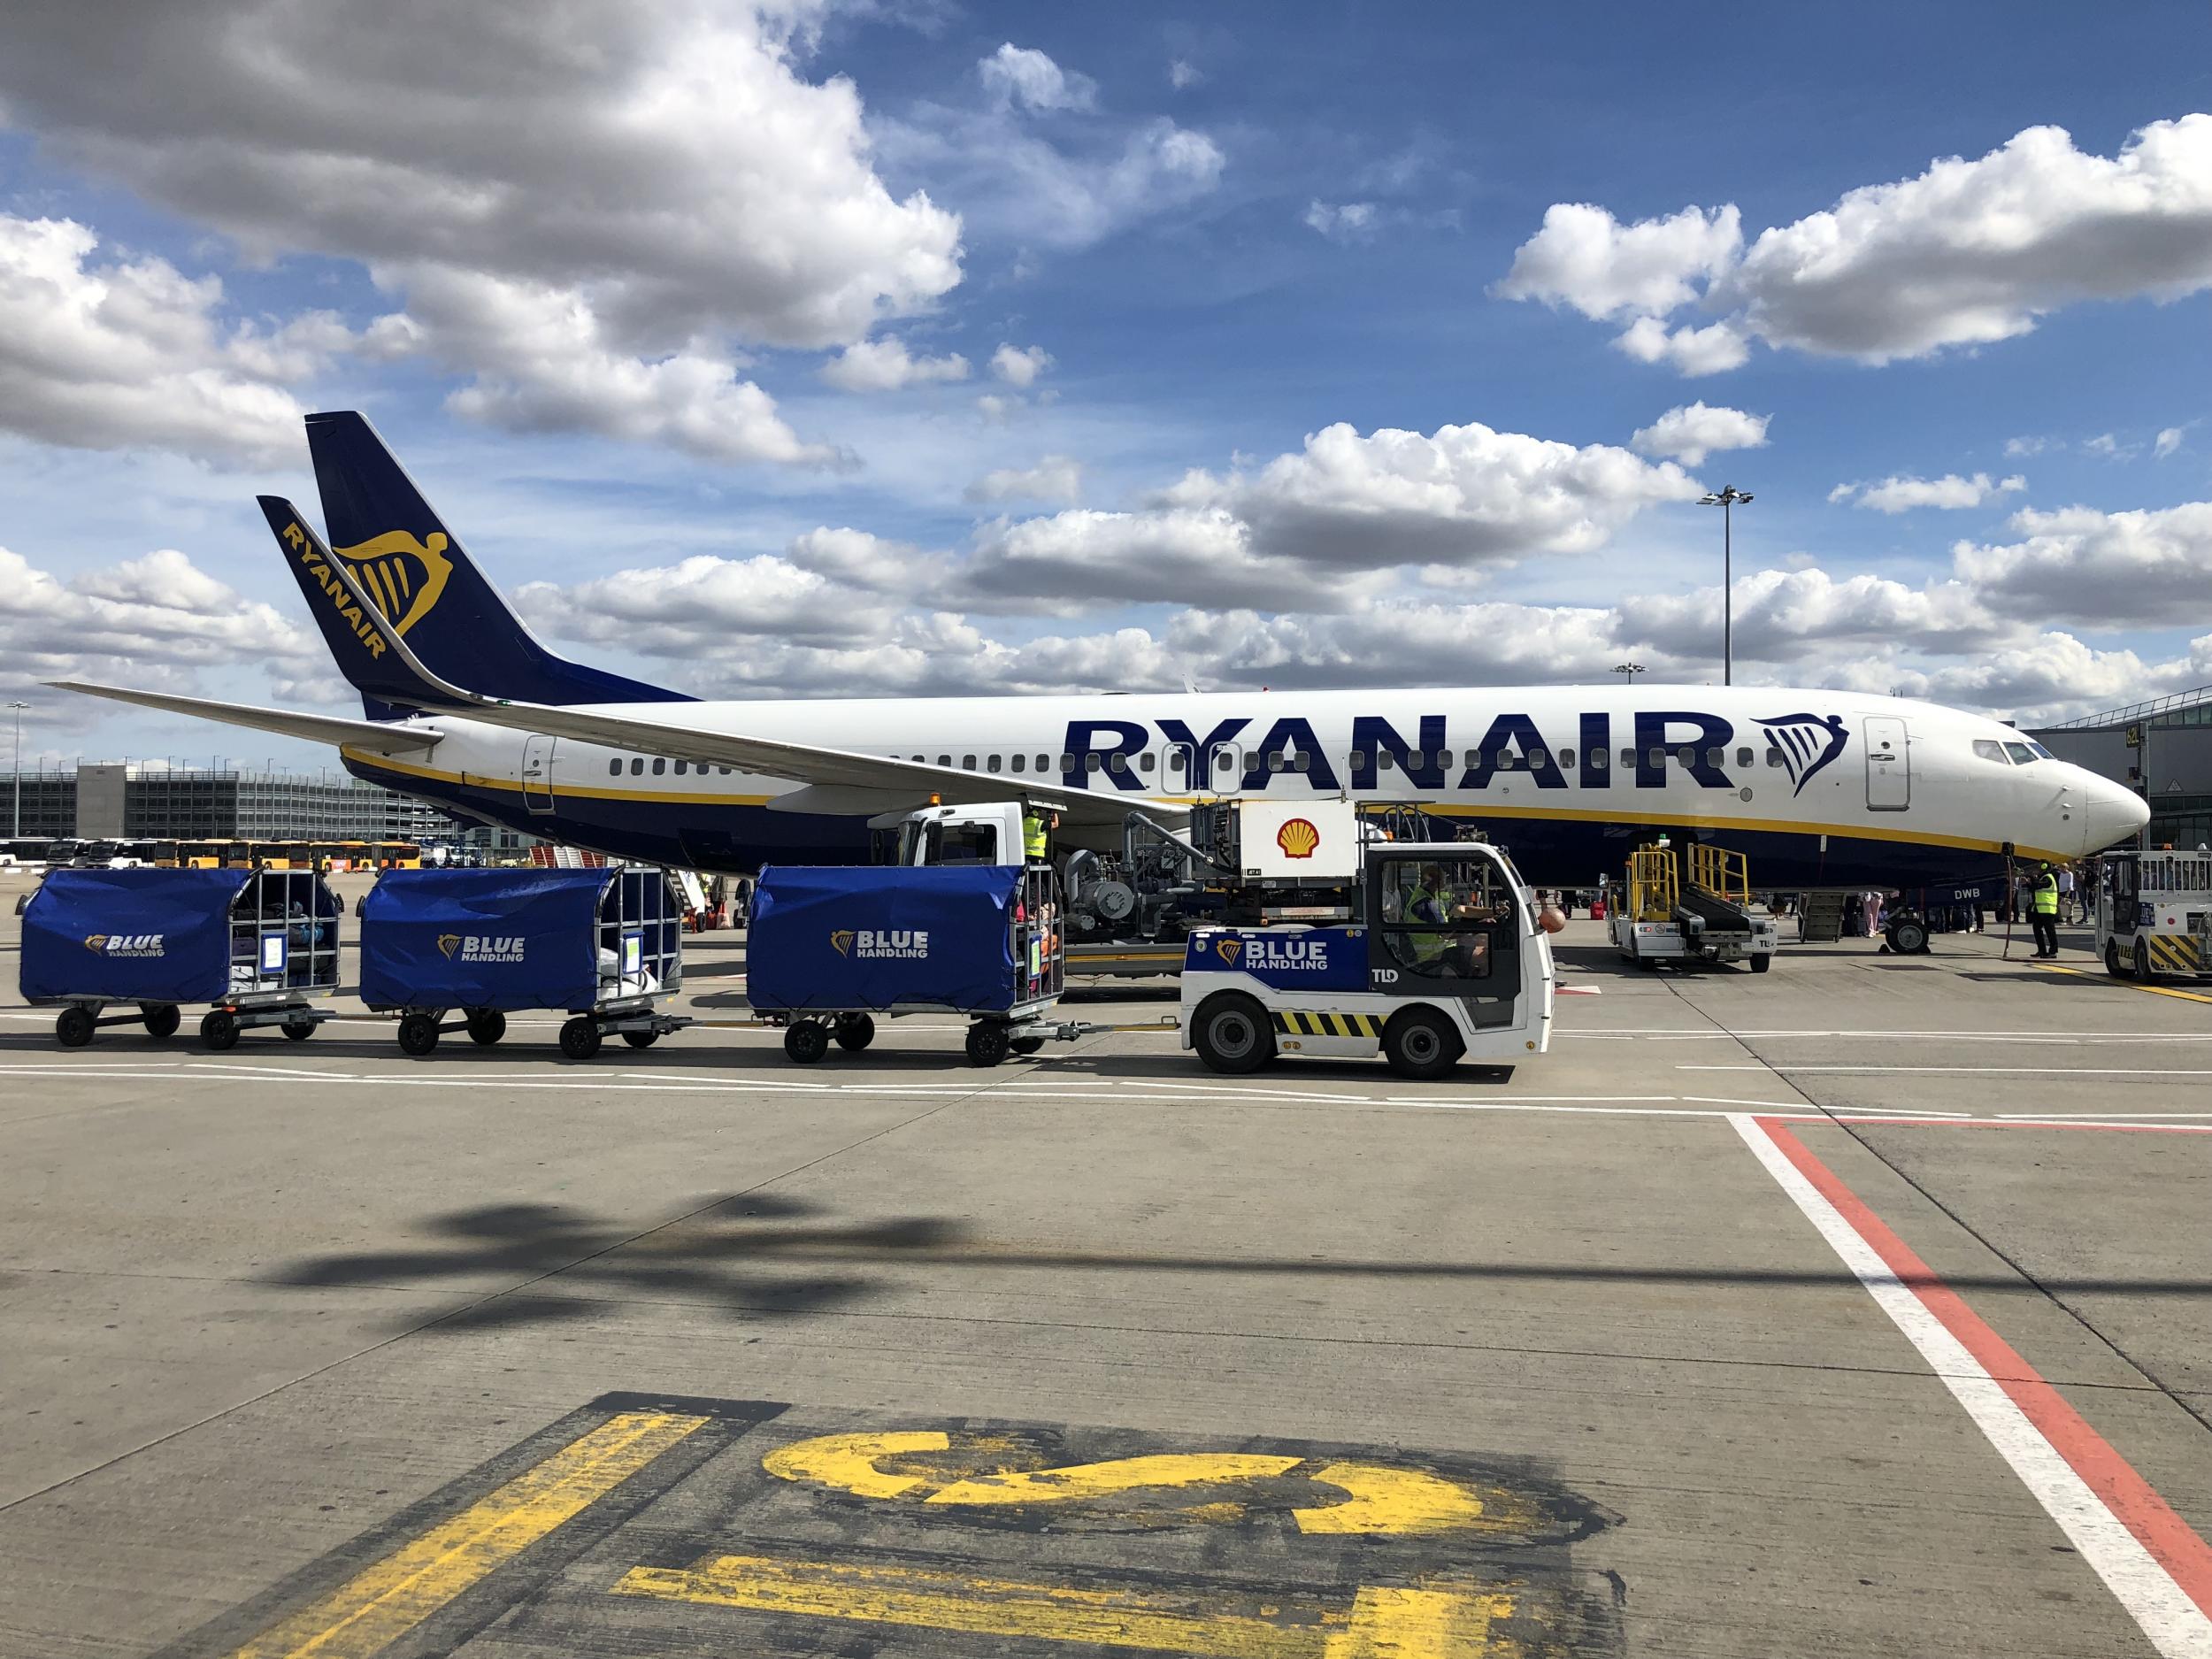 Most eco-friendly airline? Ryanair’s latest ad has left regulators unconvinced